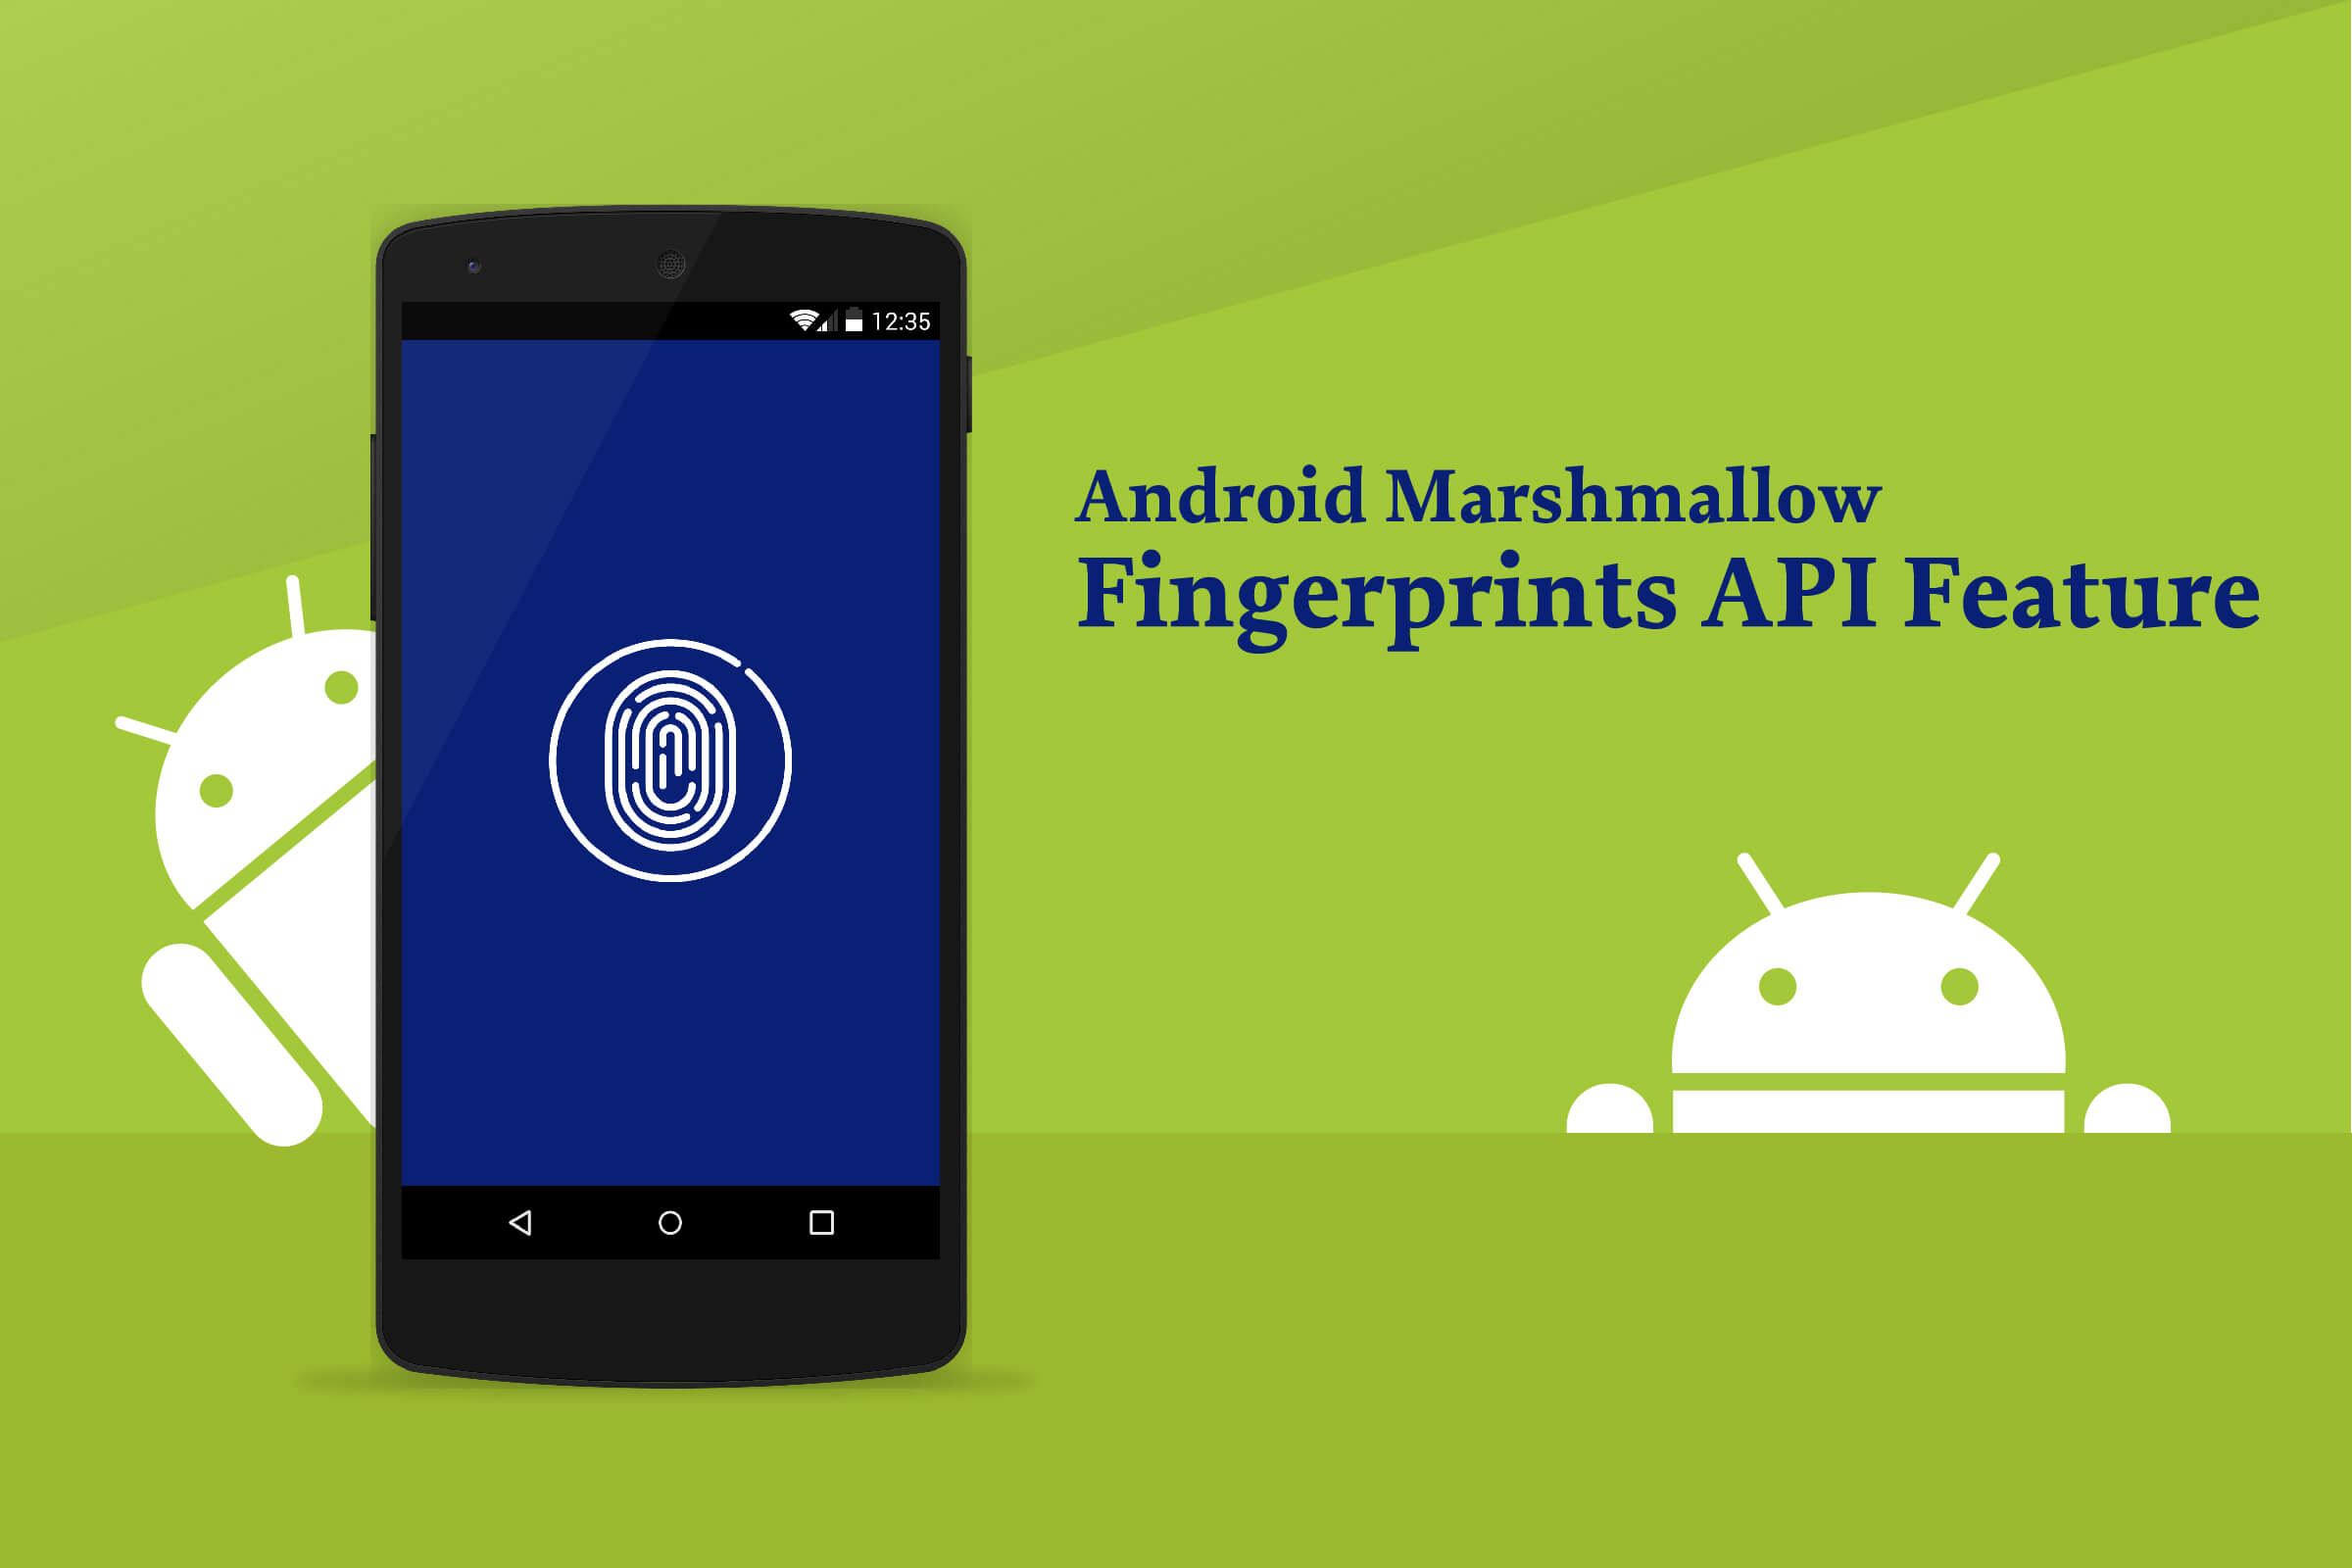 Android Marshmallow Fingerprints API Feature